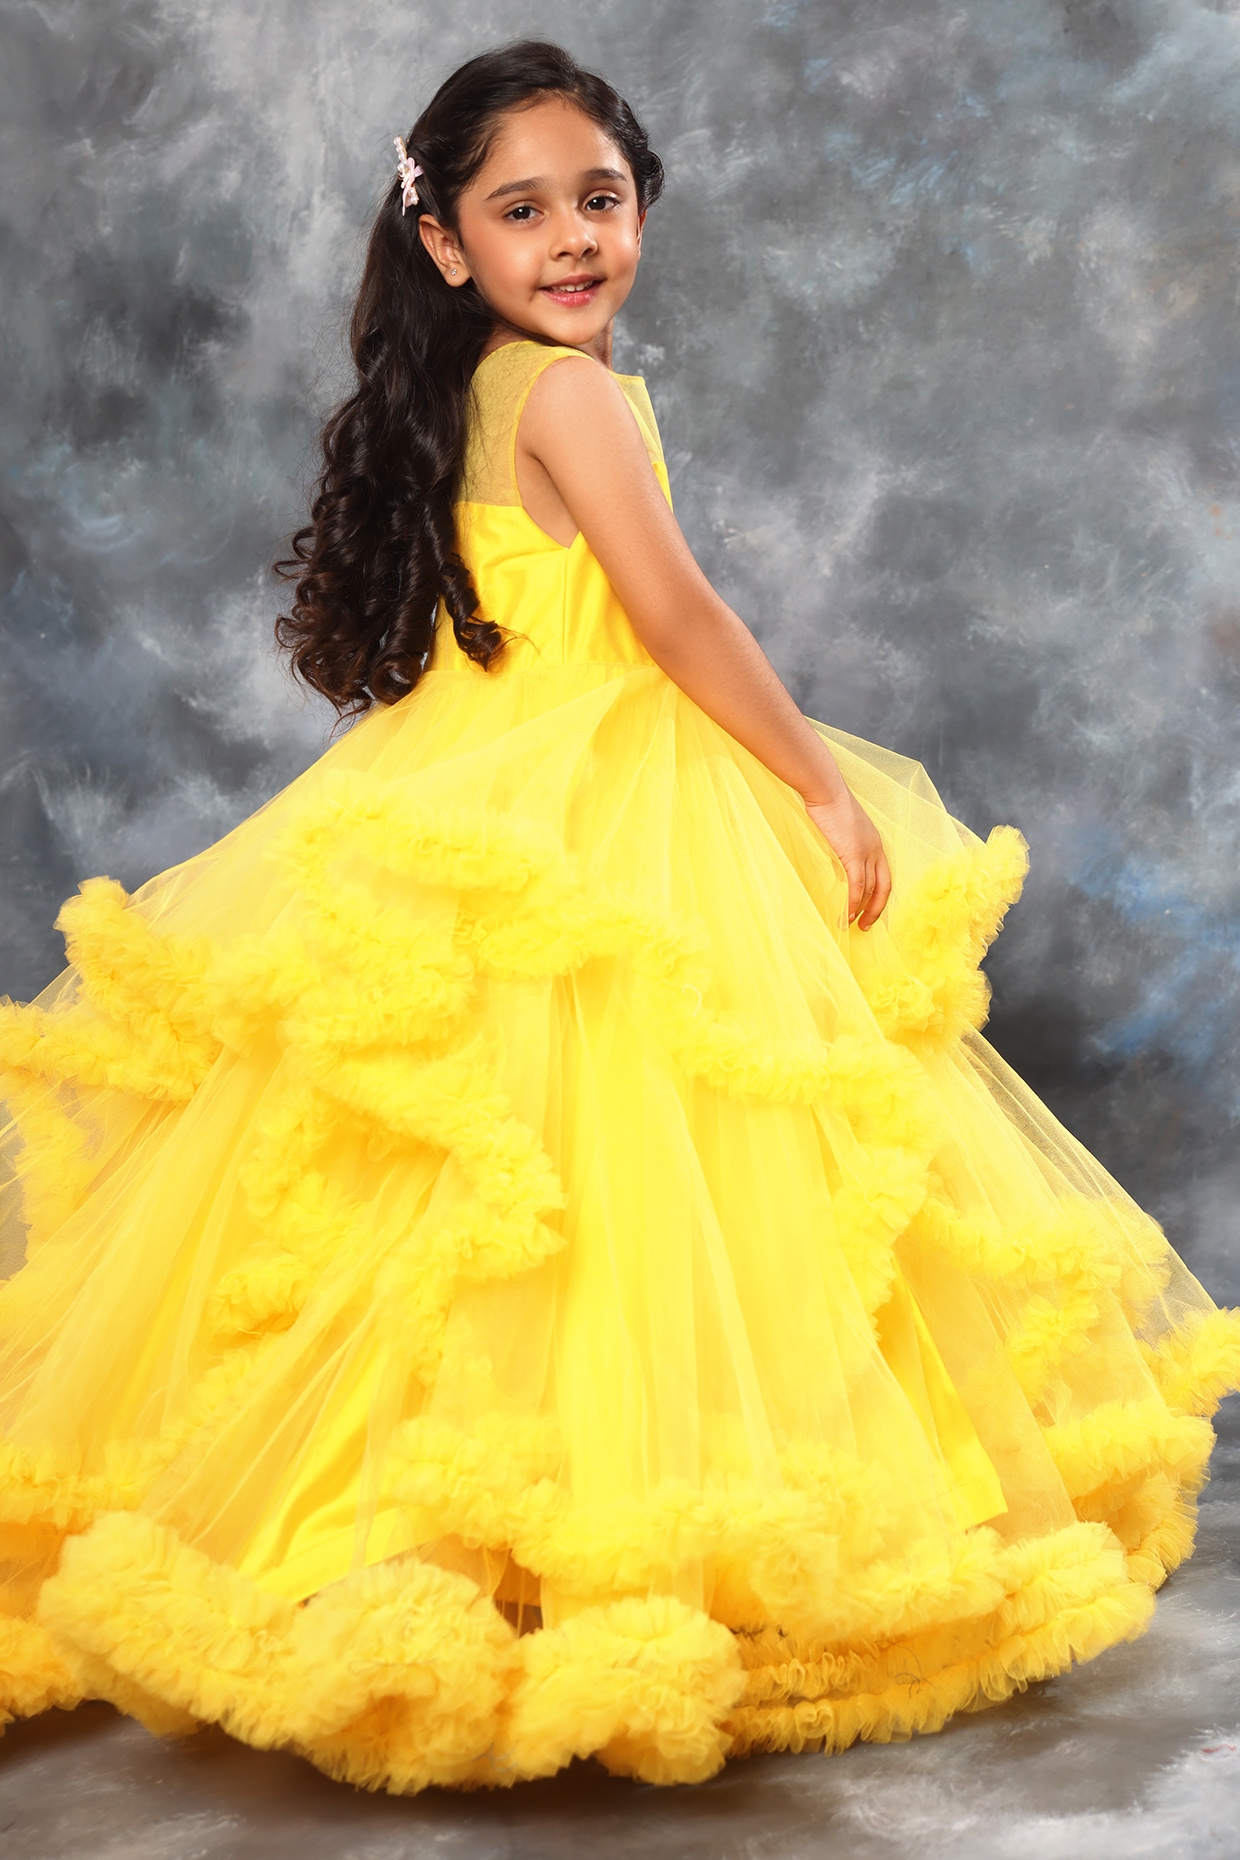 Designer Yellow Tutu Dresses For Girls|First Birthday Dress For Babies